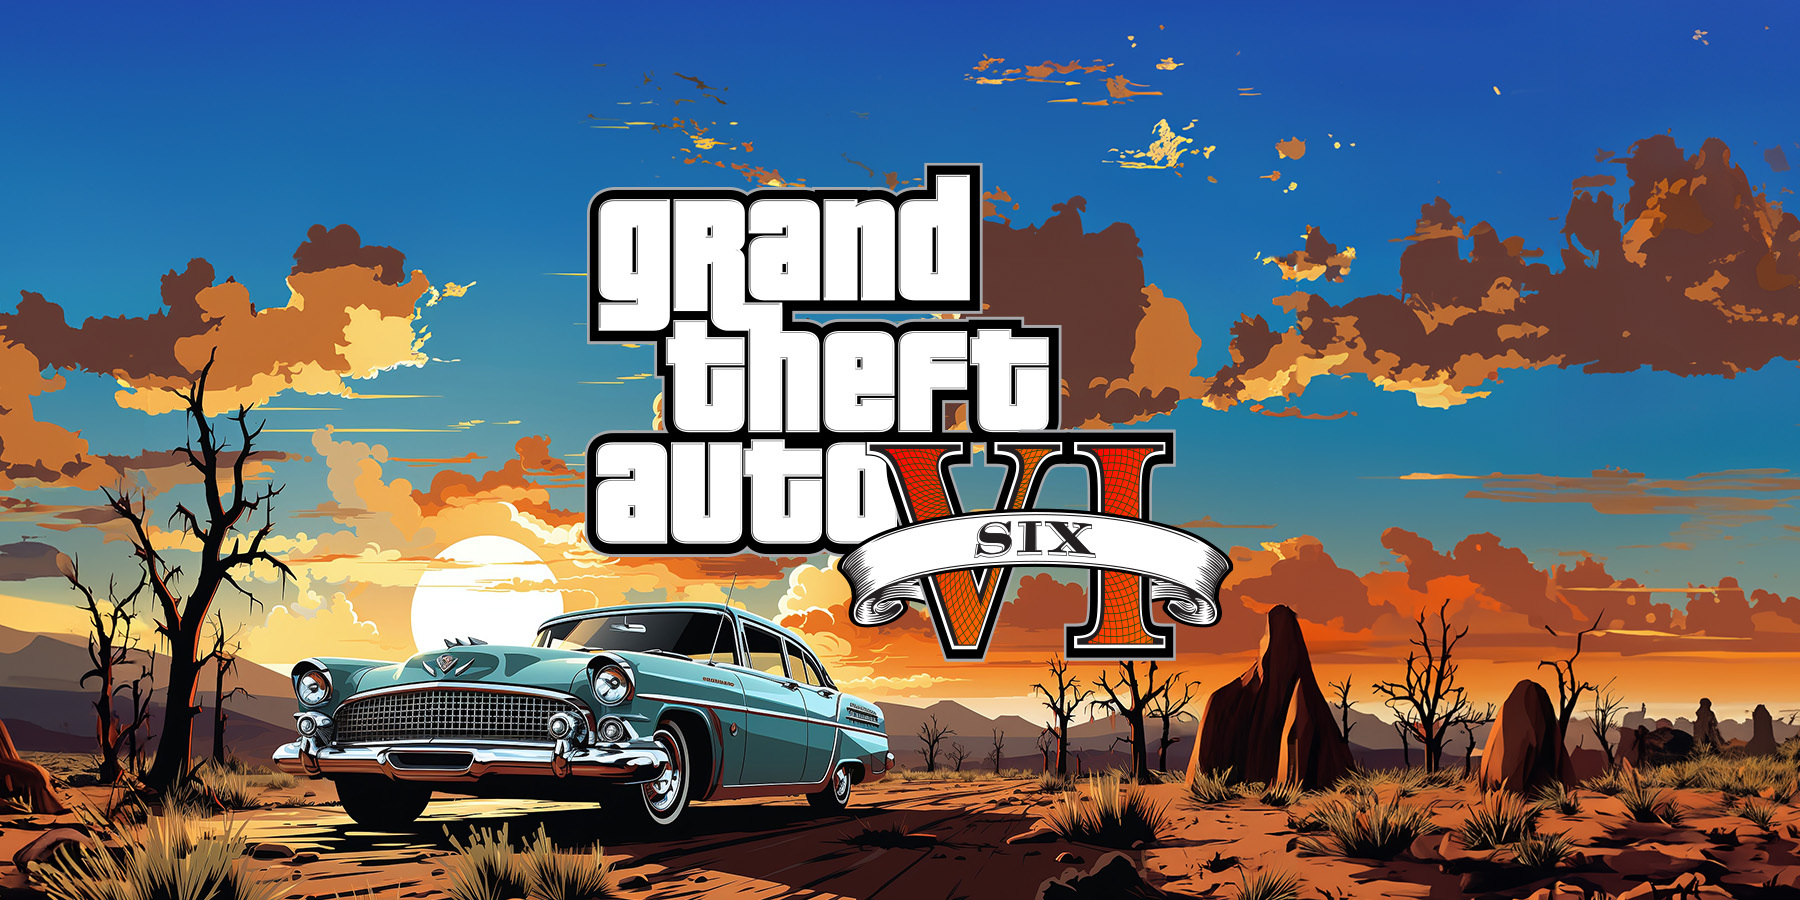 GTA 6 trailer officially announced by Rockstar Games